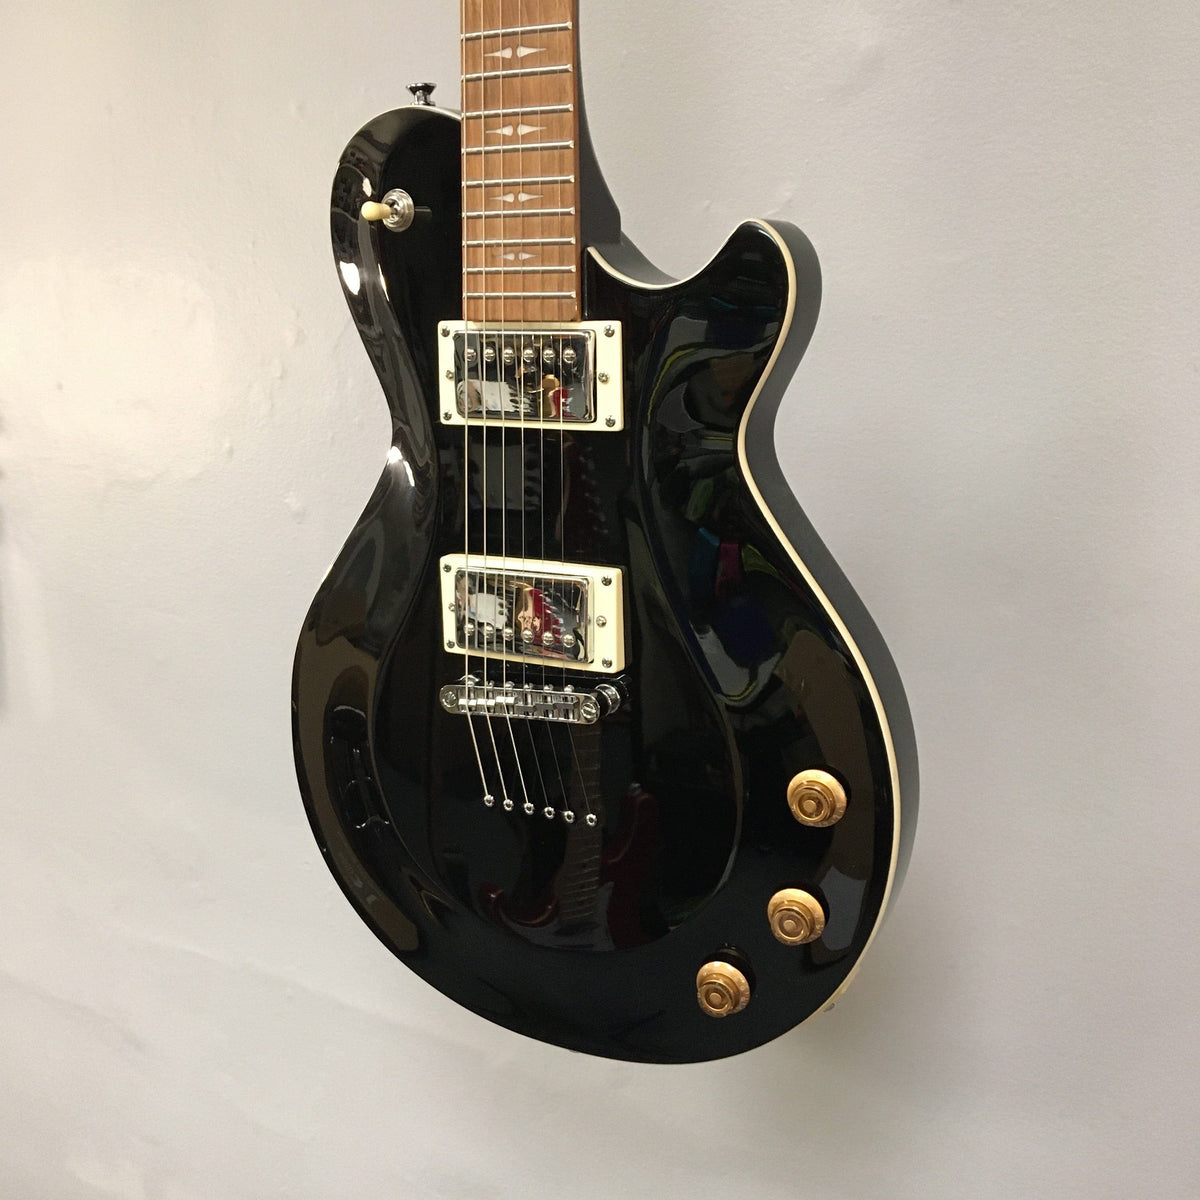 Michael Kelly Patriot Decree Standard Black Guitars on Main